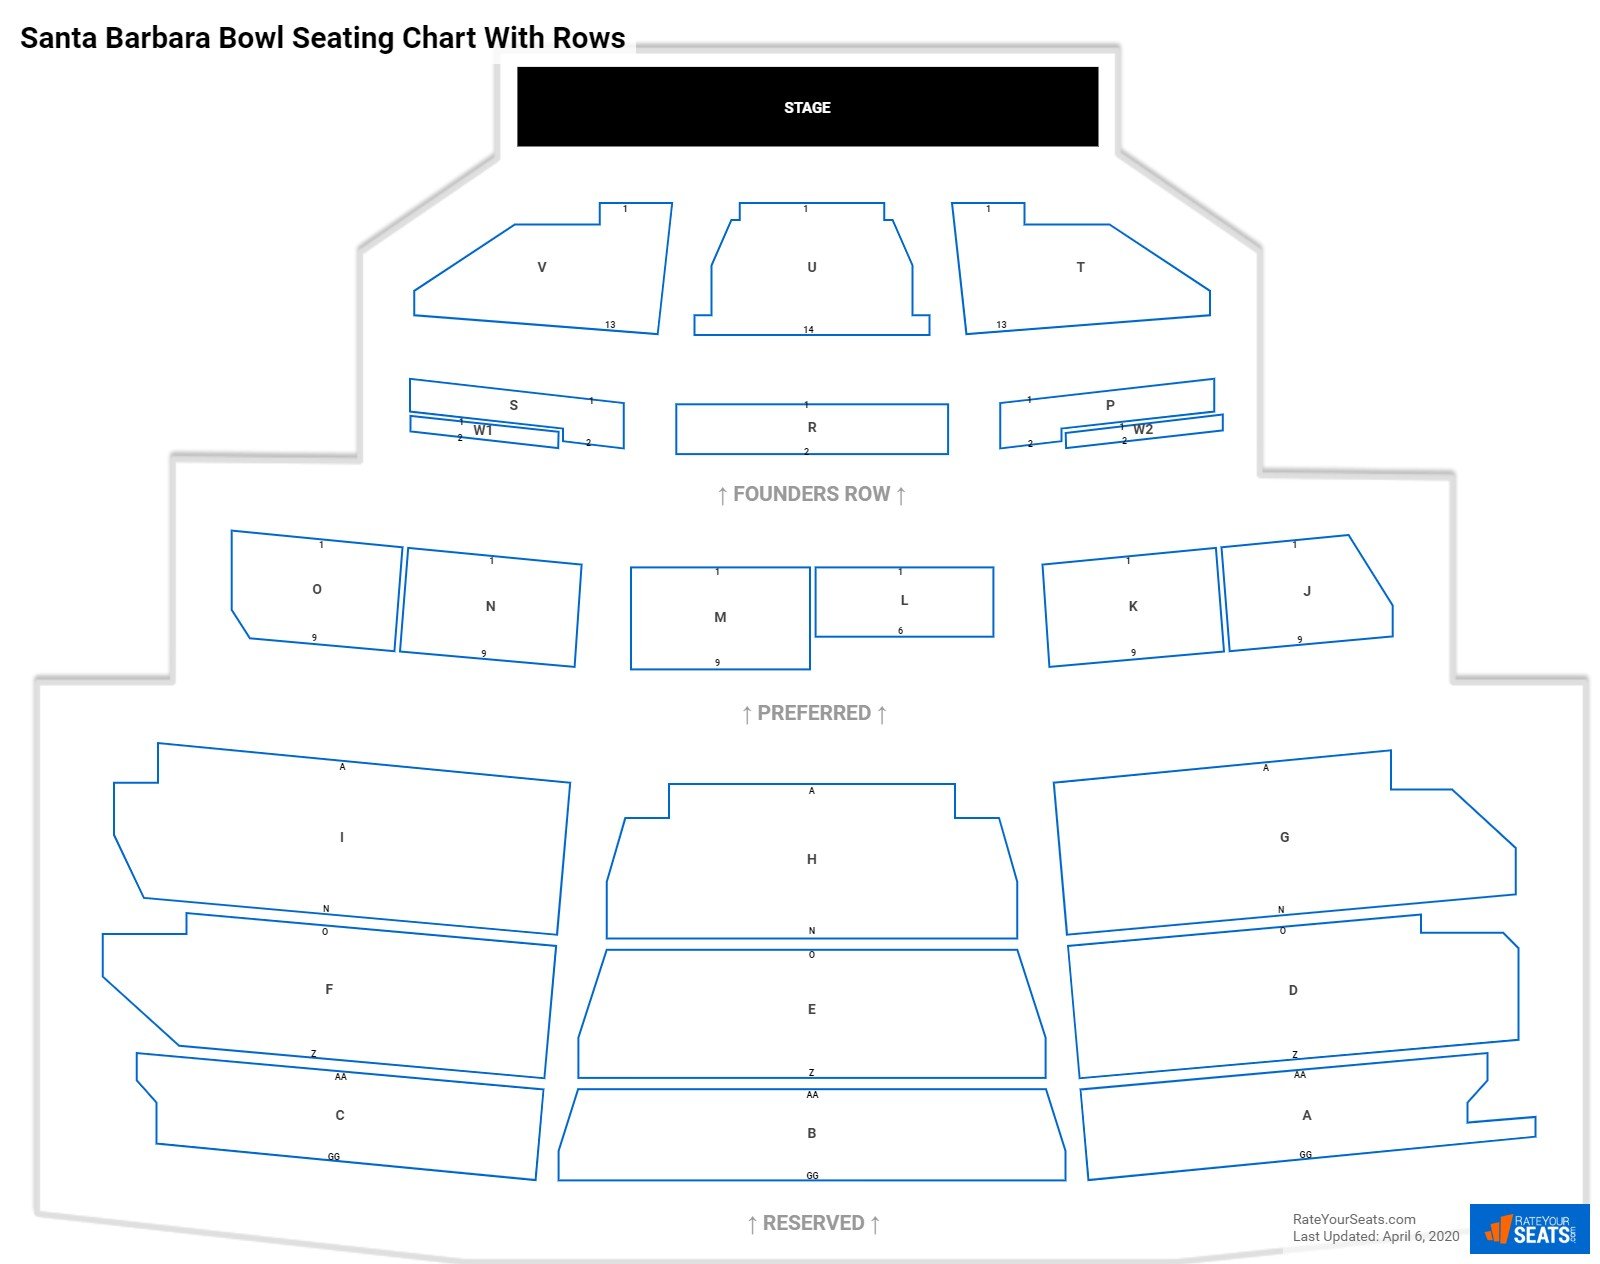 Santa Barbara Bowl seating chart with row numbers